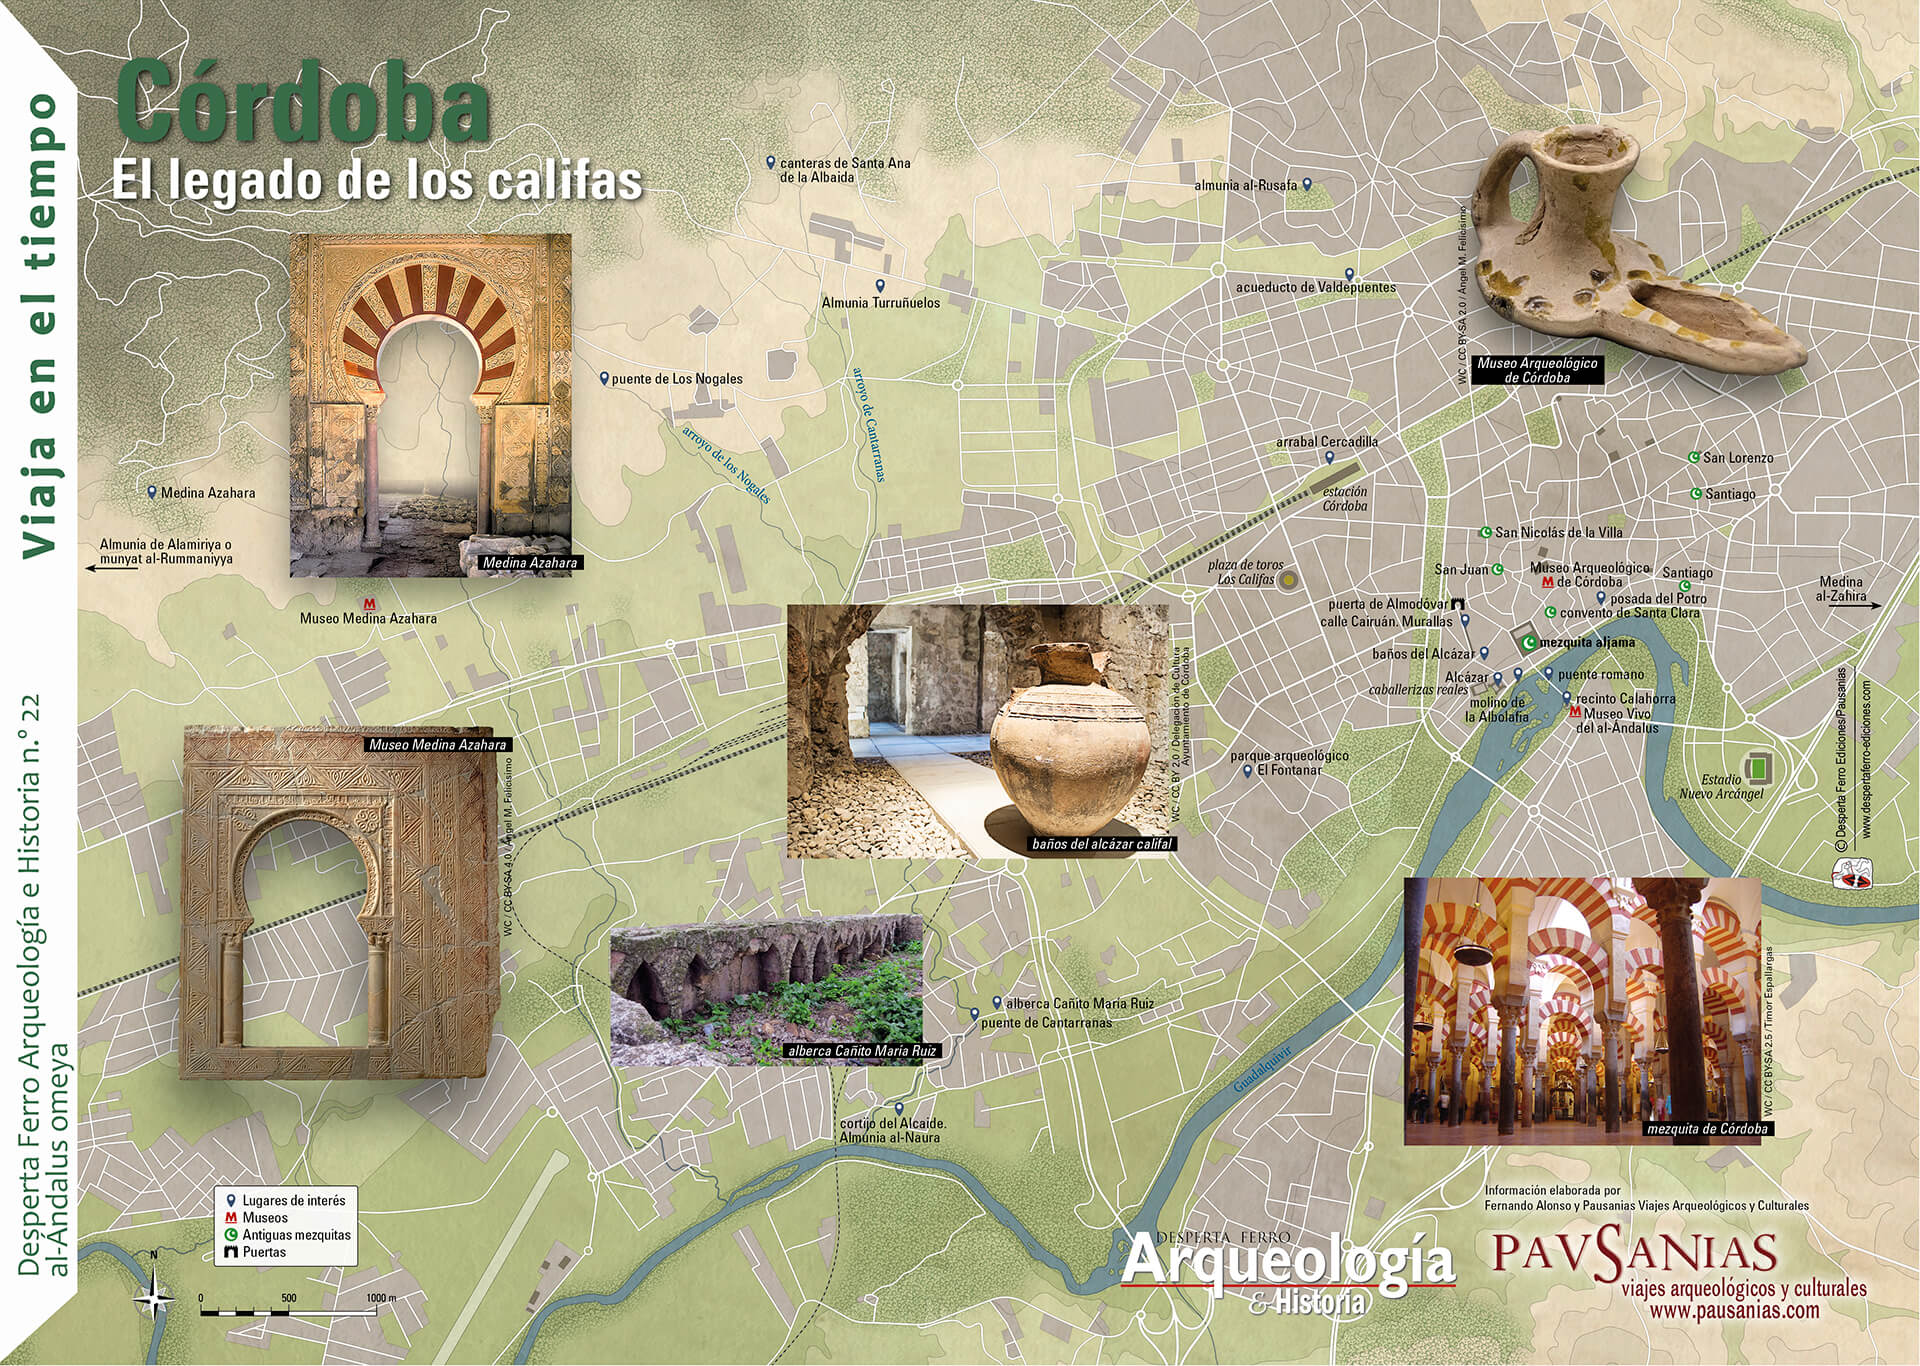 Viaje arqueológico a la Córdoba califal